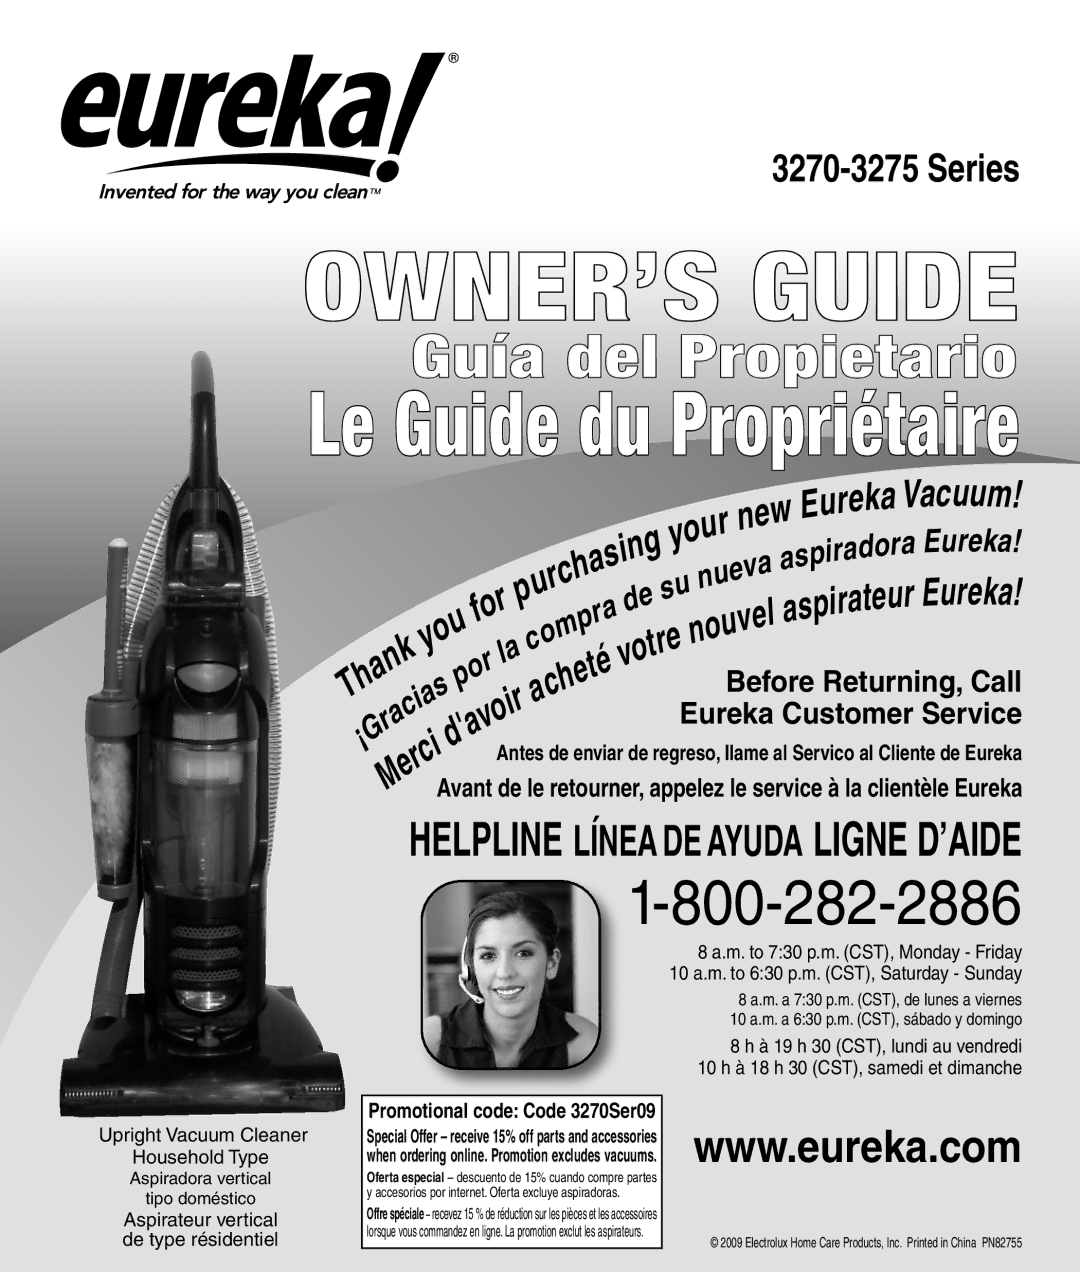 Eureka eureka manual Upright Vacuum Cleaner Household Type, Aspirateur vertical de type résidentiel 